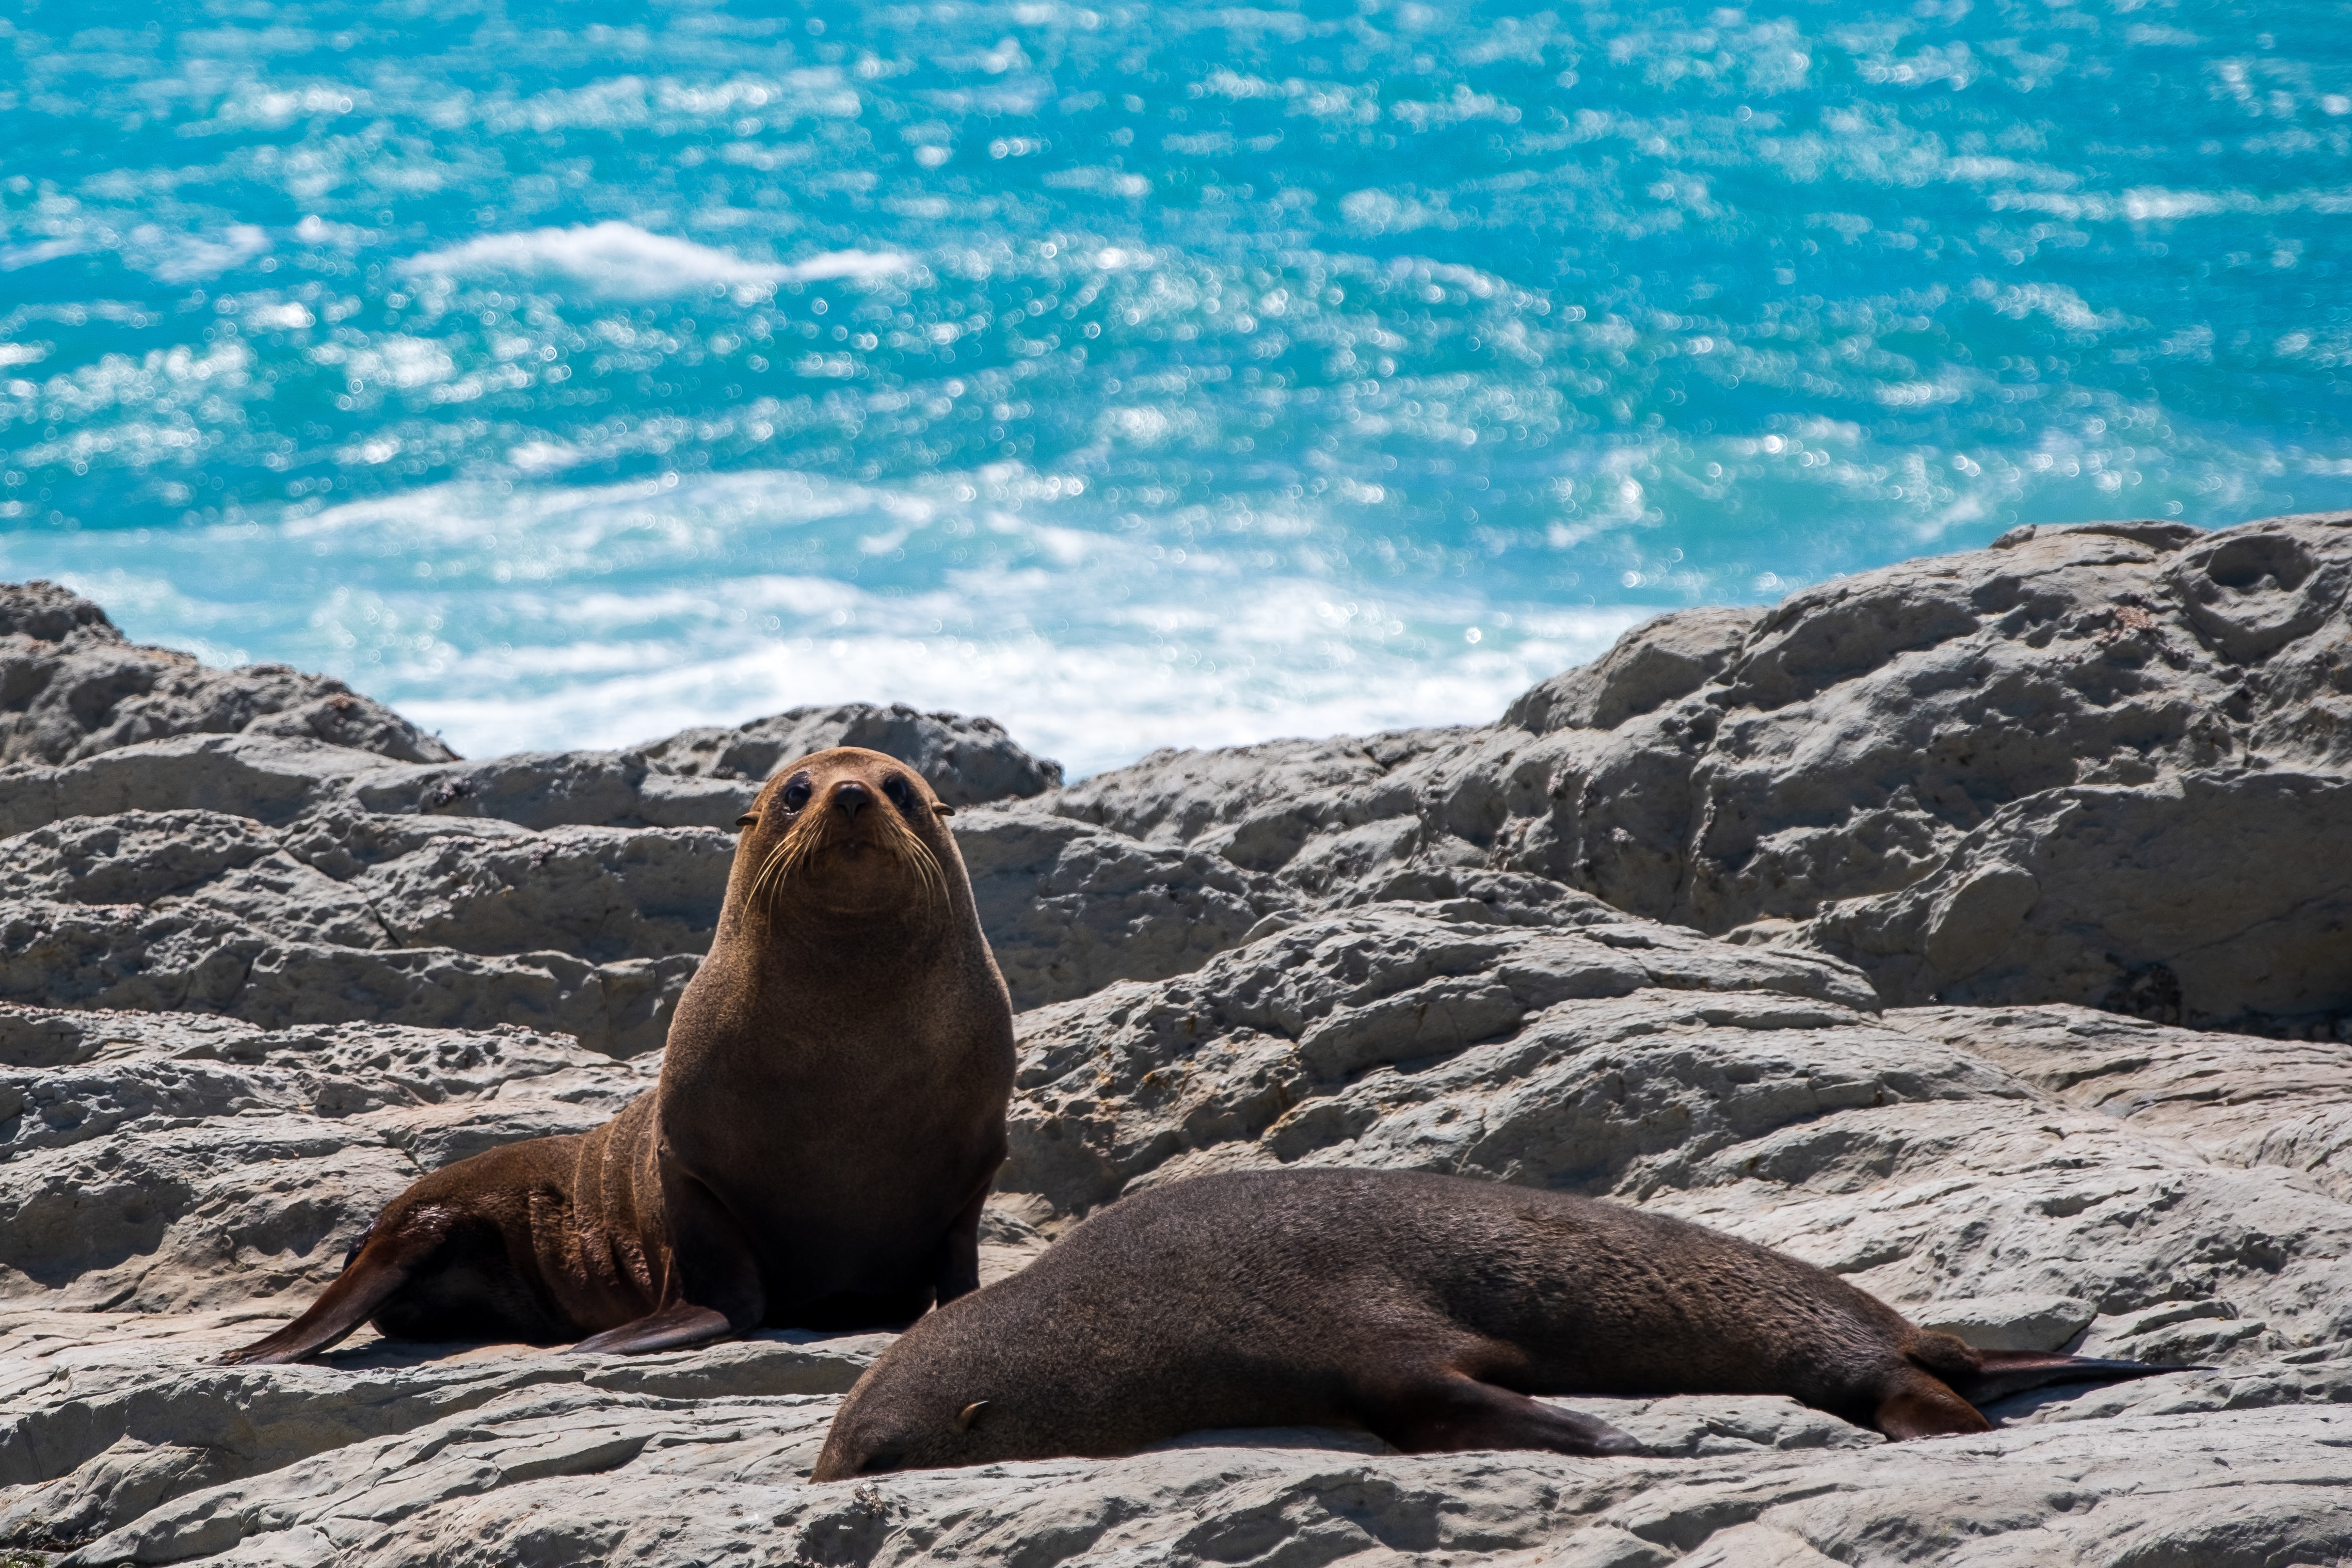 Fur seals in Kaikoura - image courtesy Sylvain Cleymans and Unsplash